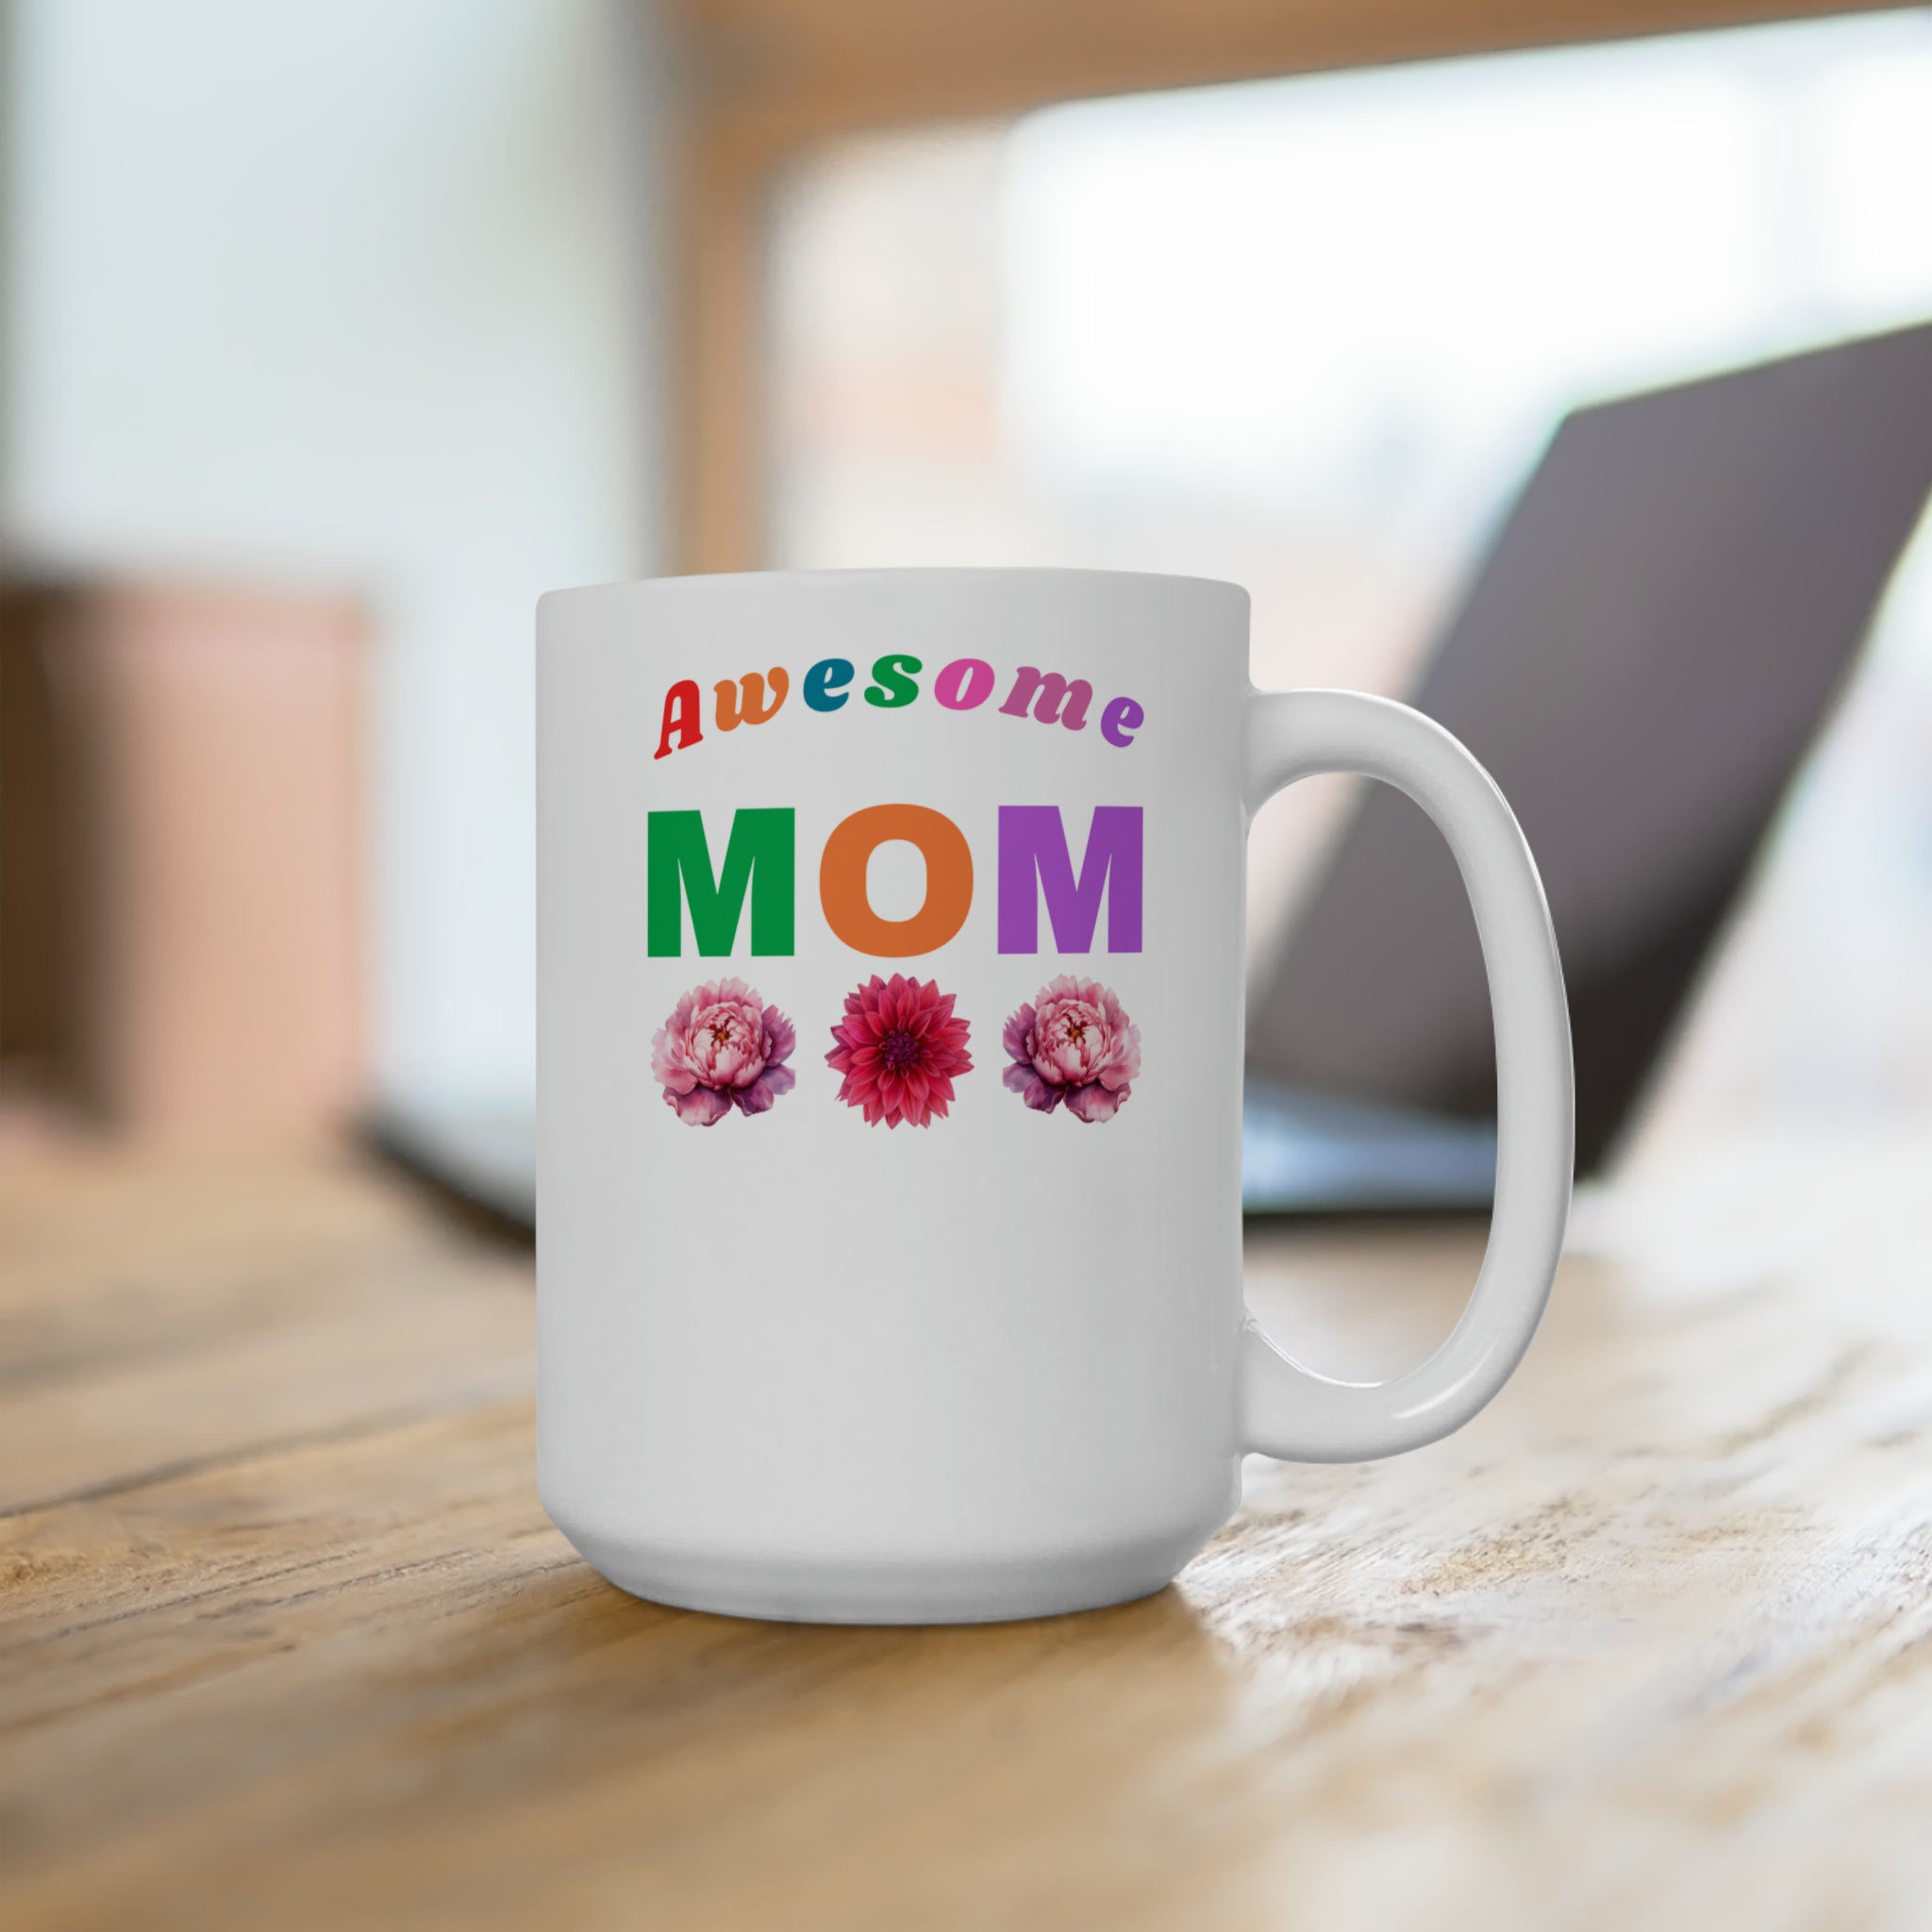 Awesome Mom Ceramic 15 oz Mug, Gift for Mom, Mother's Day Gift